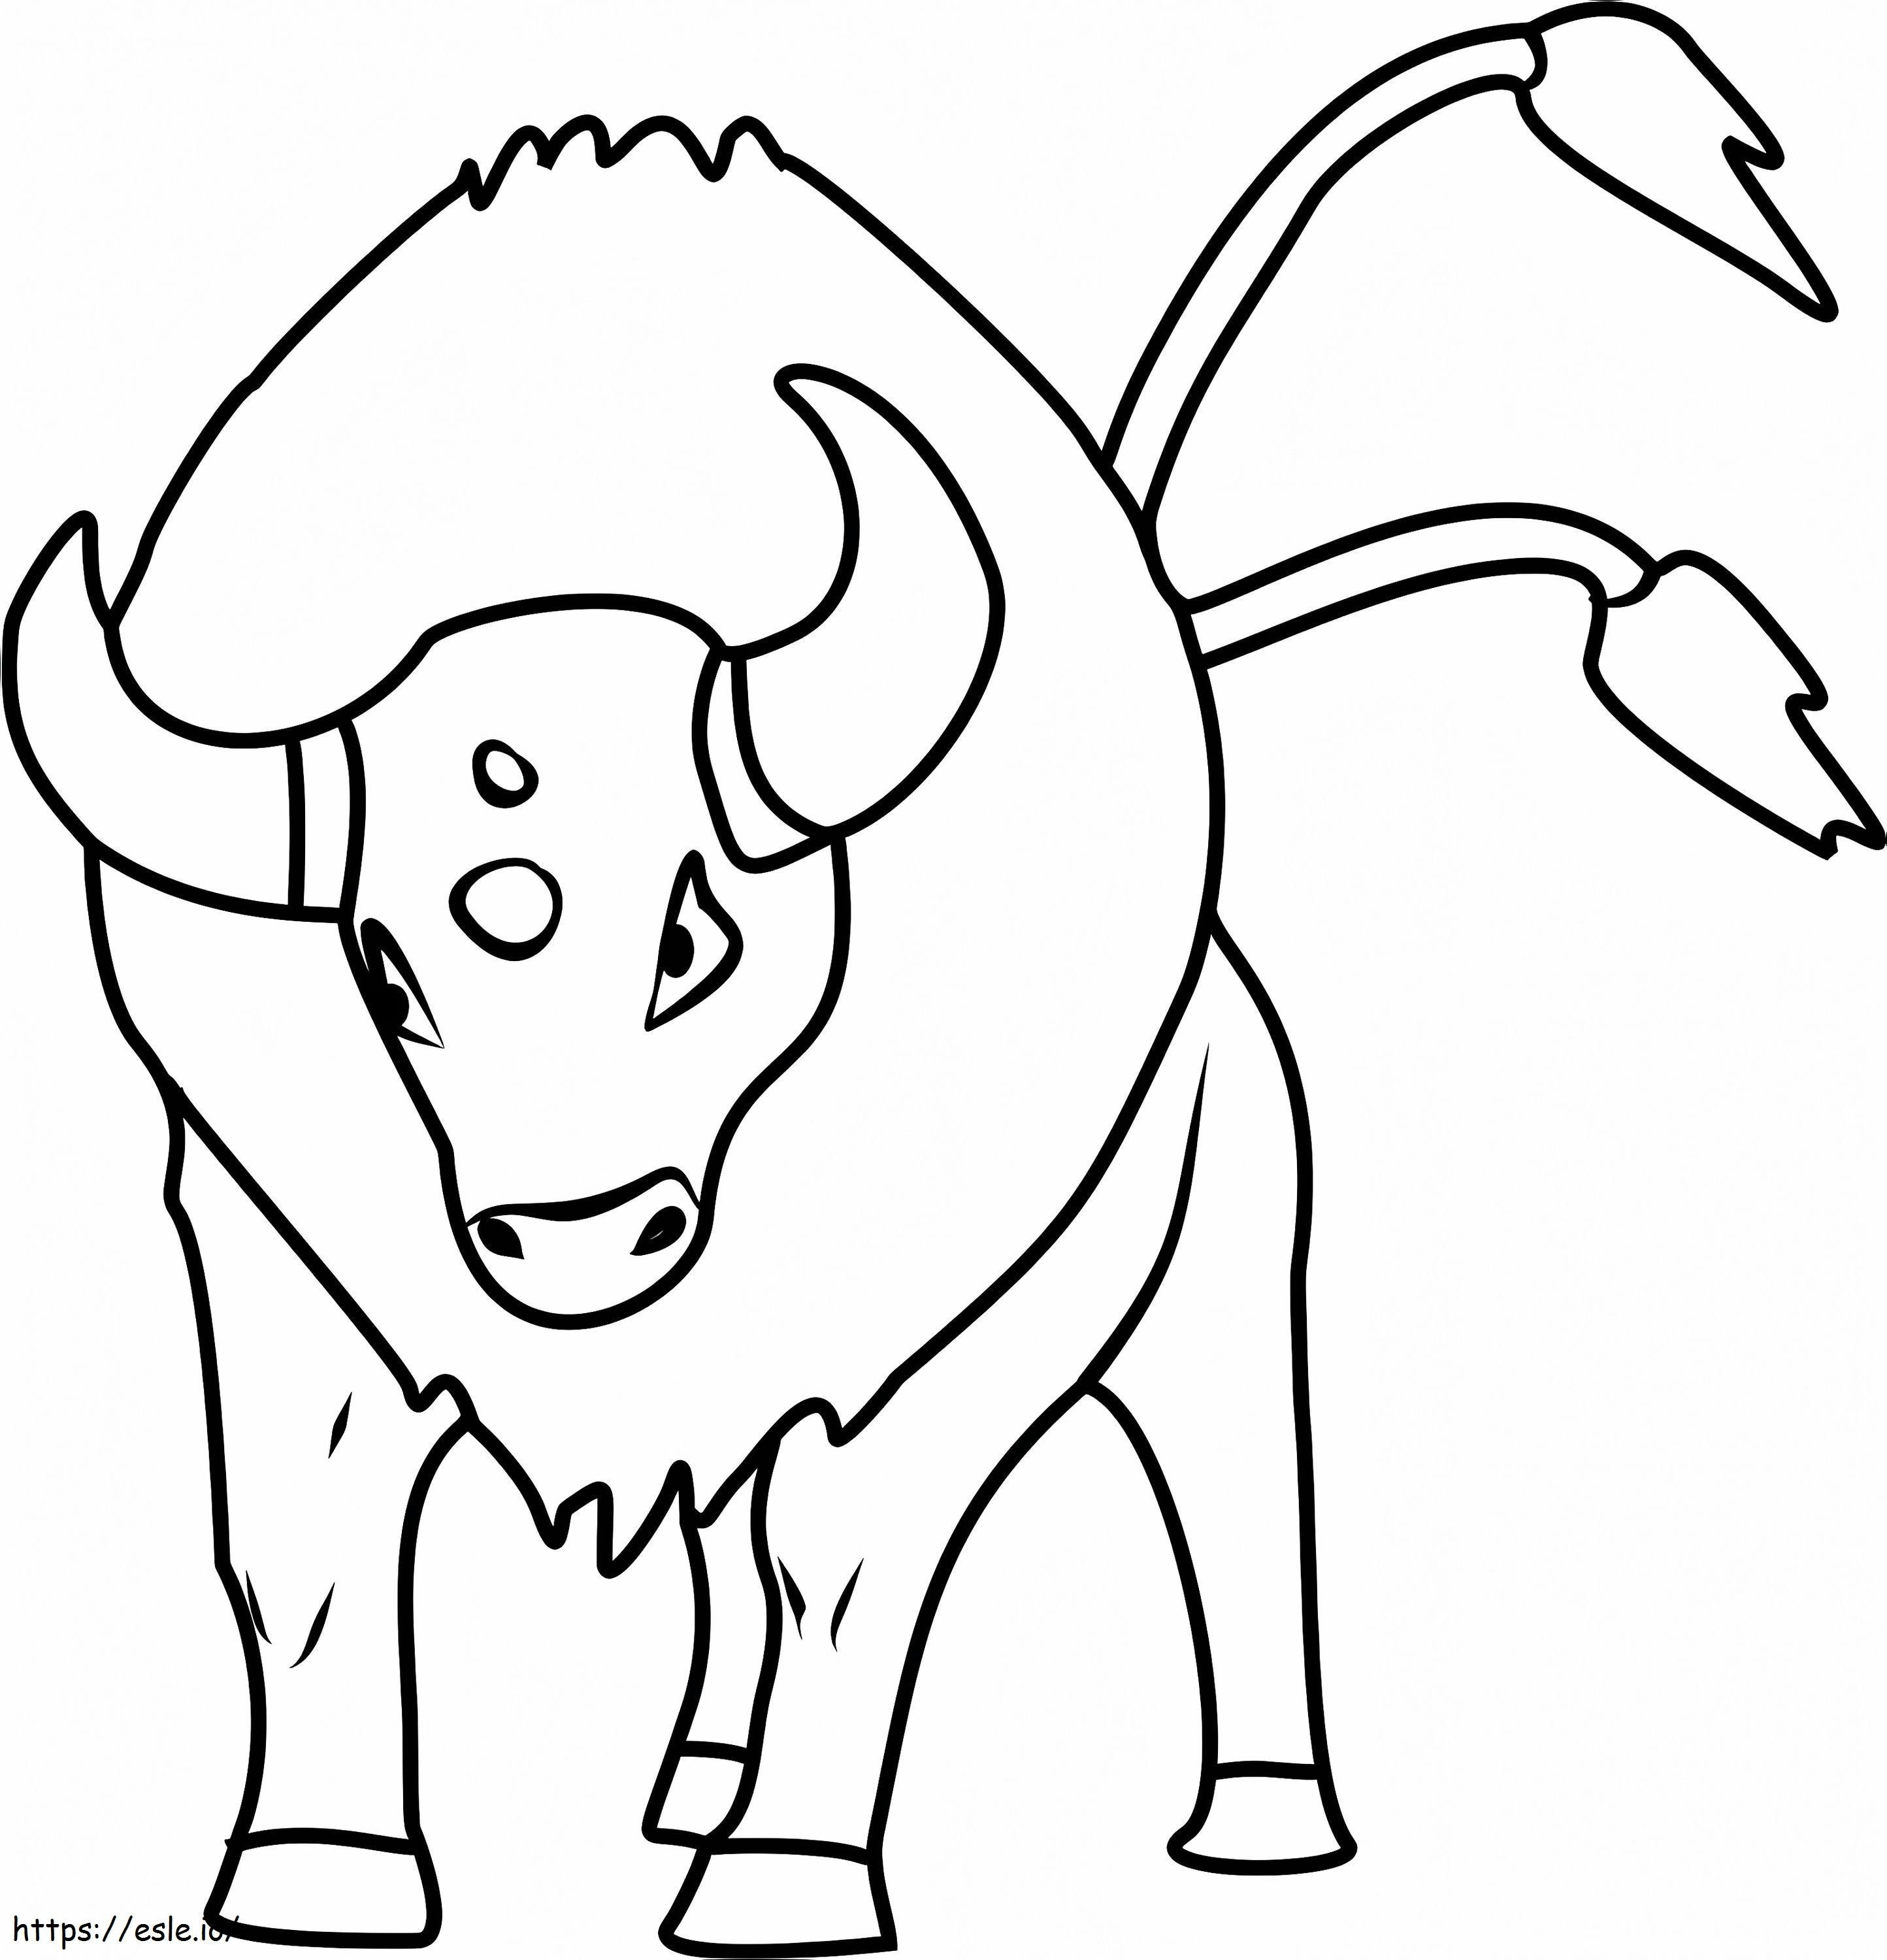 1530326135 Bulls Pokemon Go1 coloring page